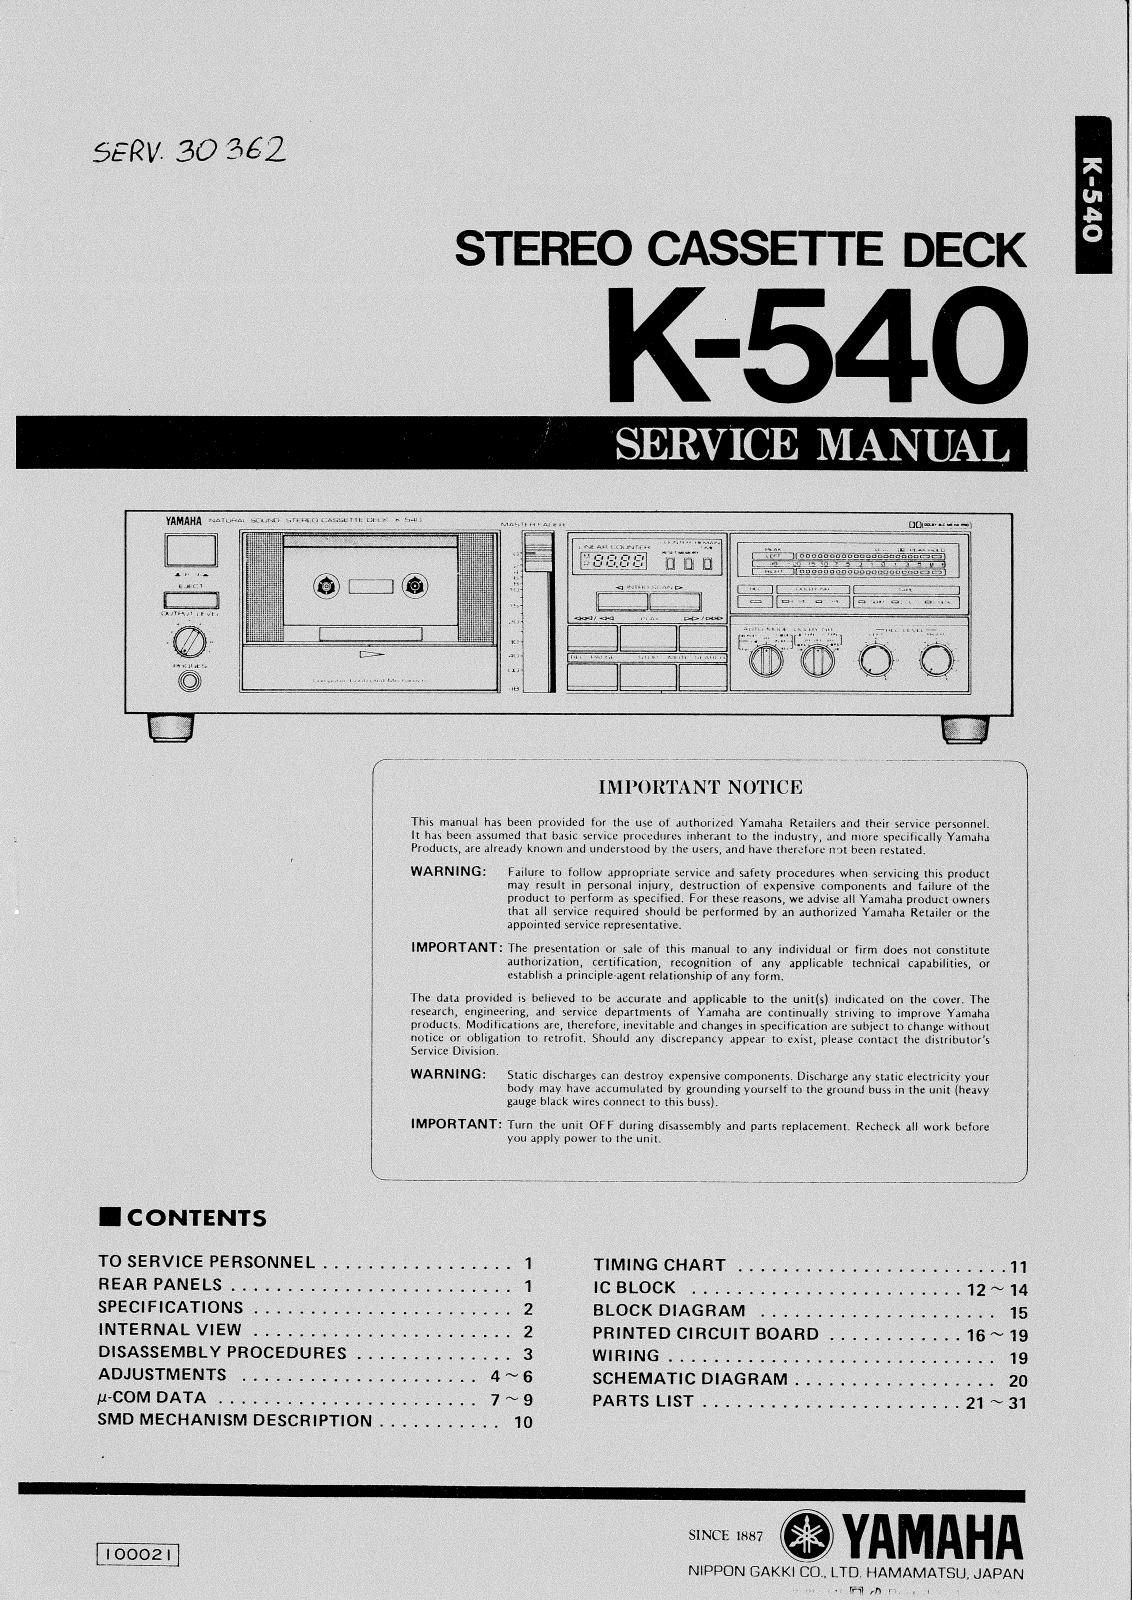 Yamaha K-540 Service Manual